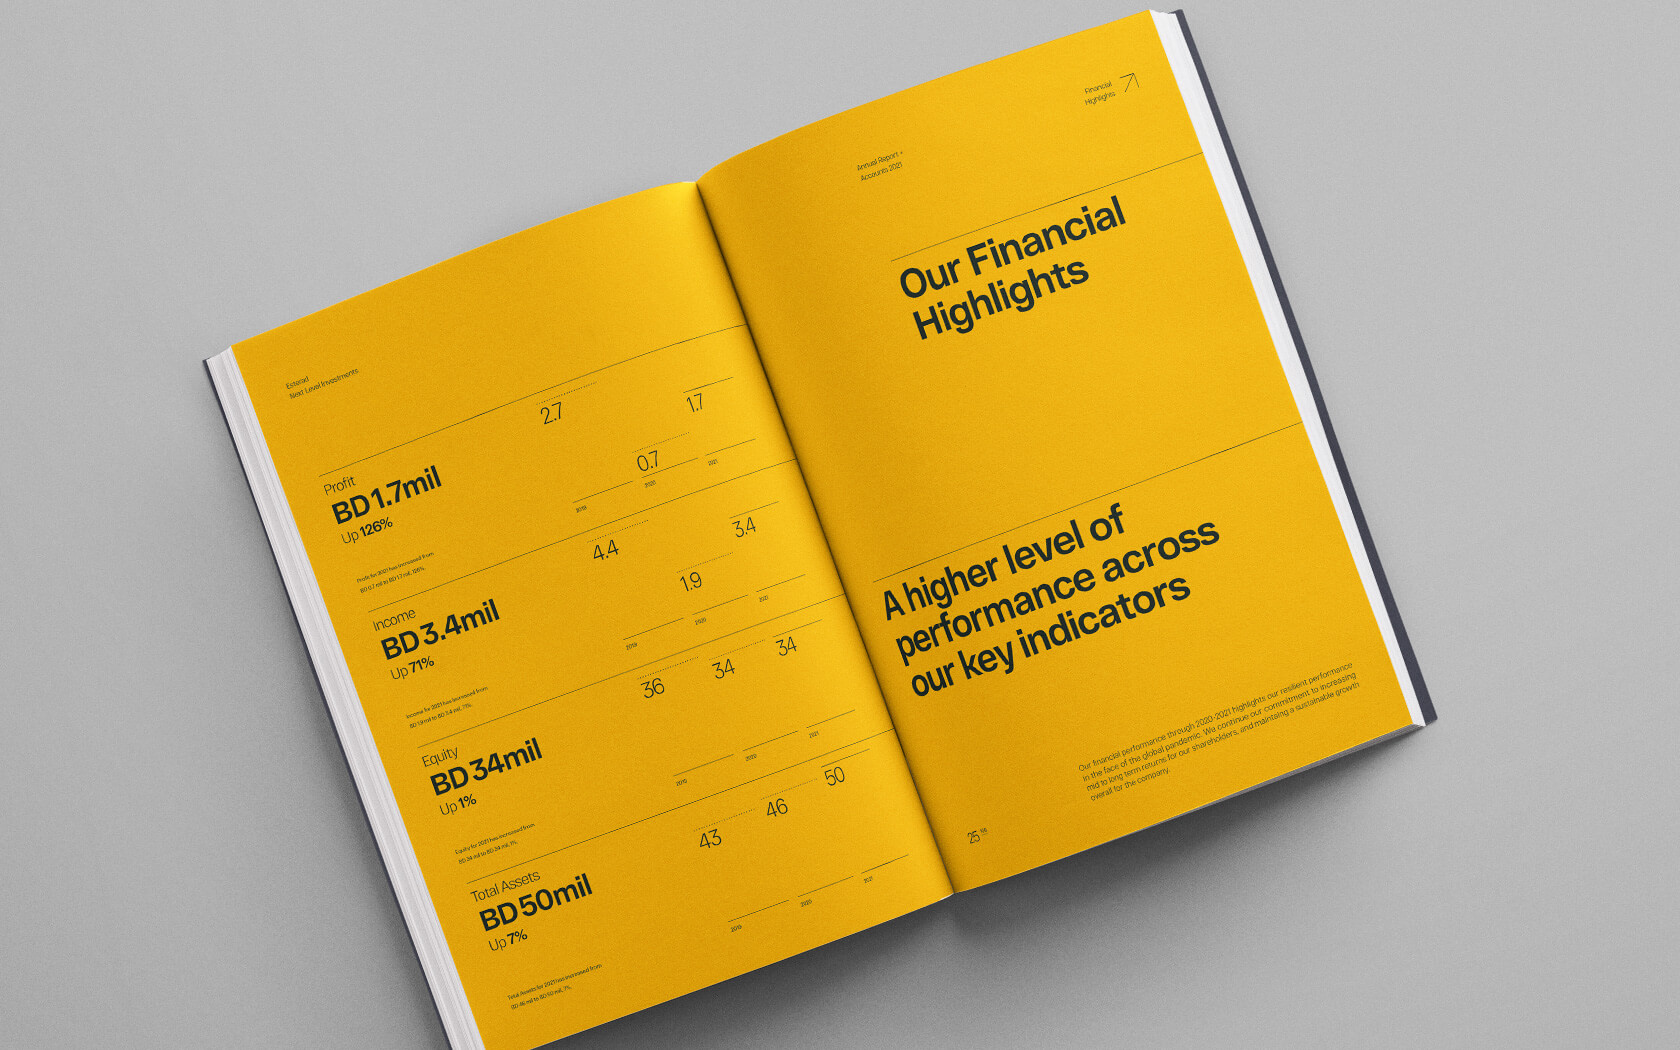 Esterad Annual Report 2021. Financial Highlights